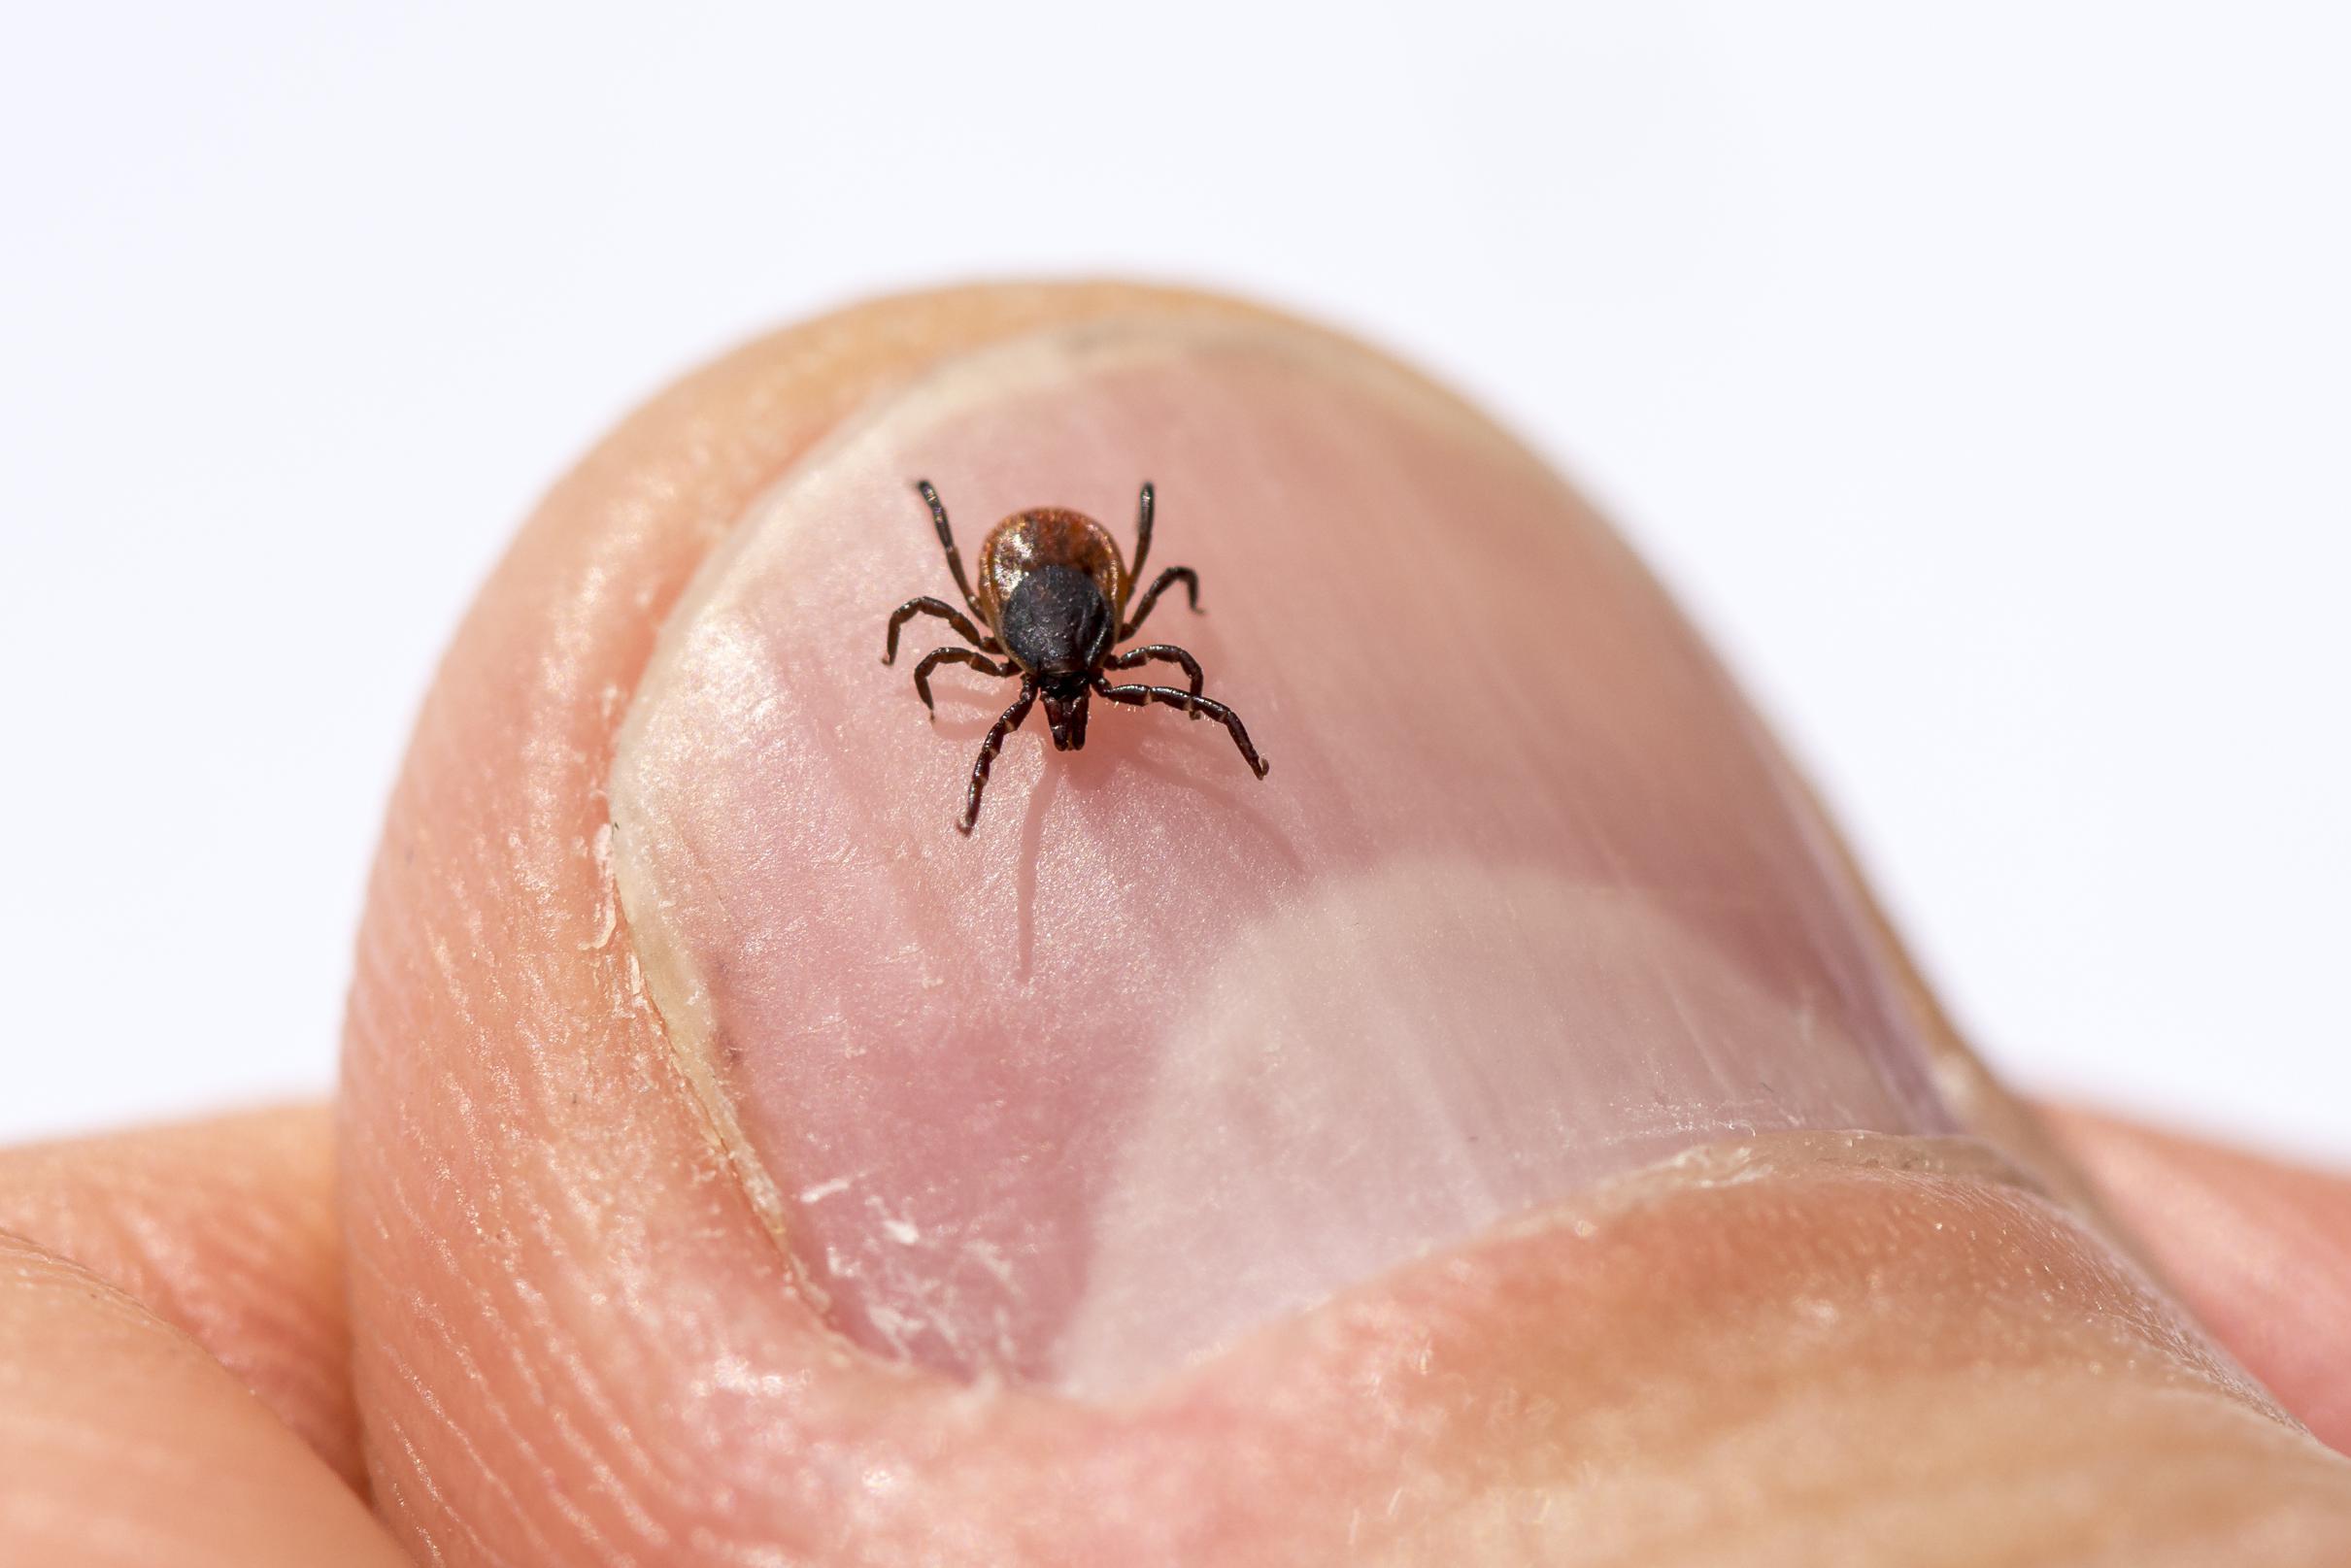 Ricerca: nuovi test sulla malattia di Lyme inaffidabili